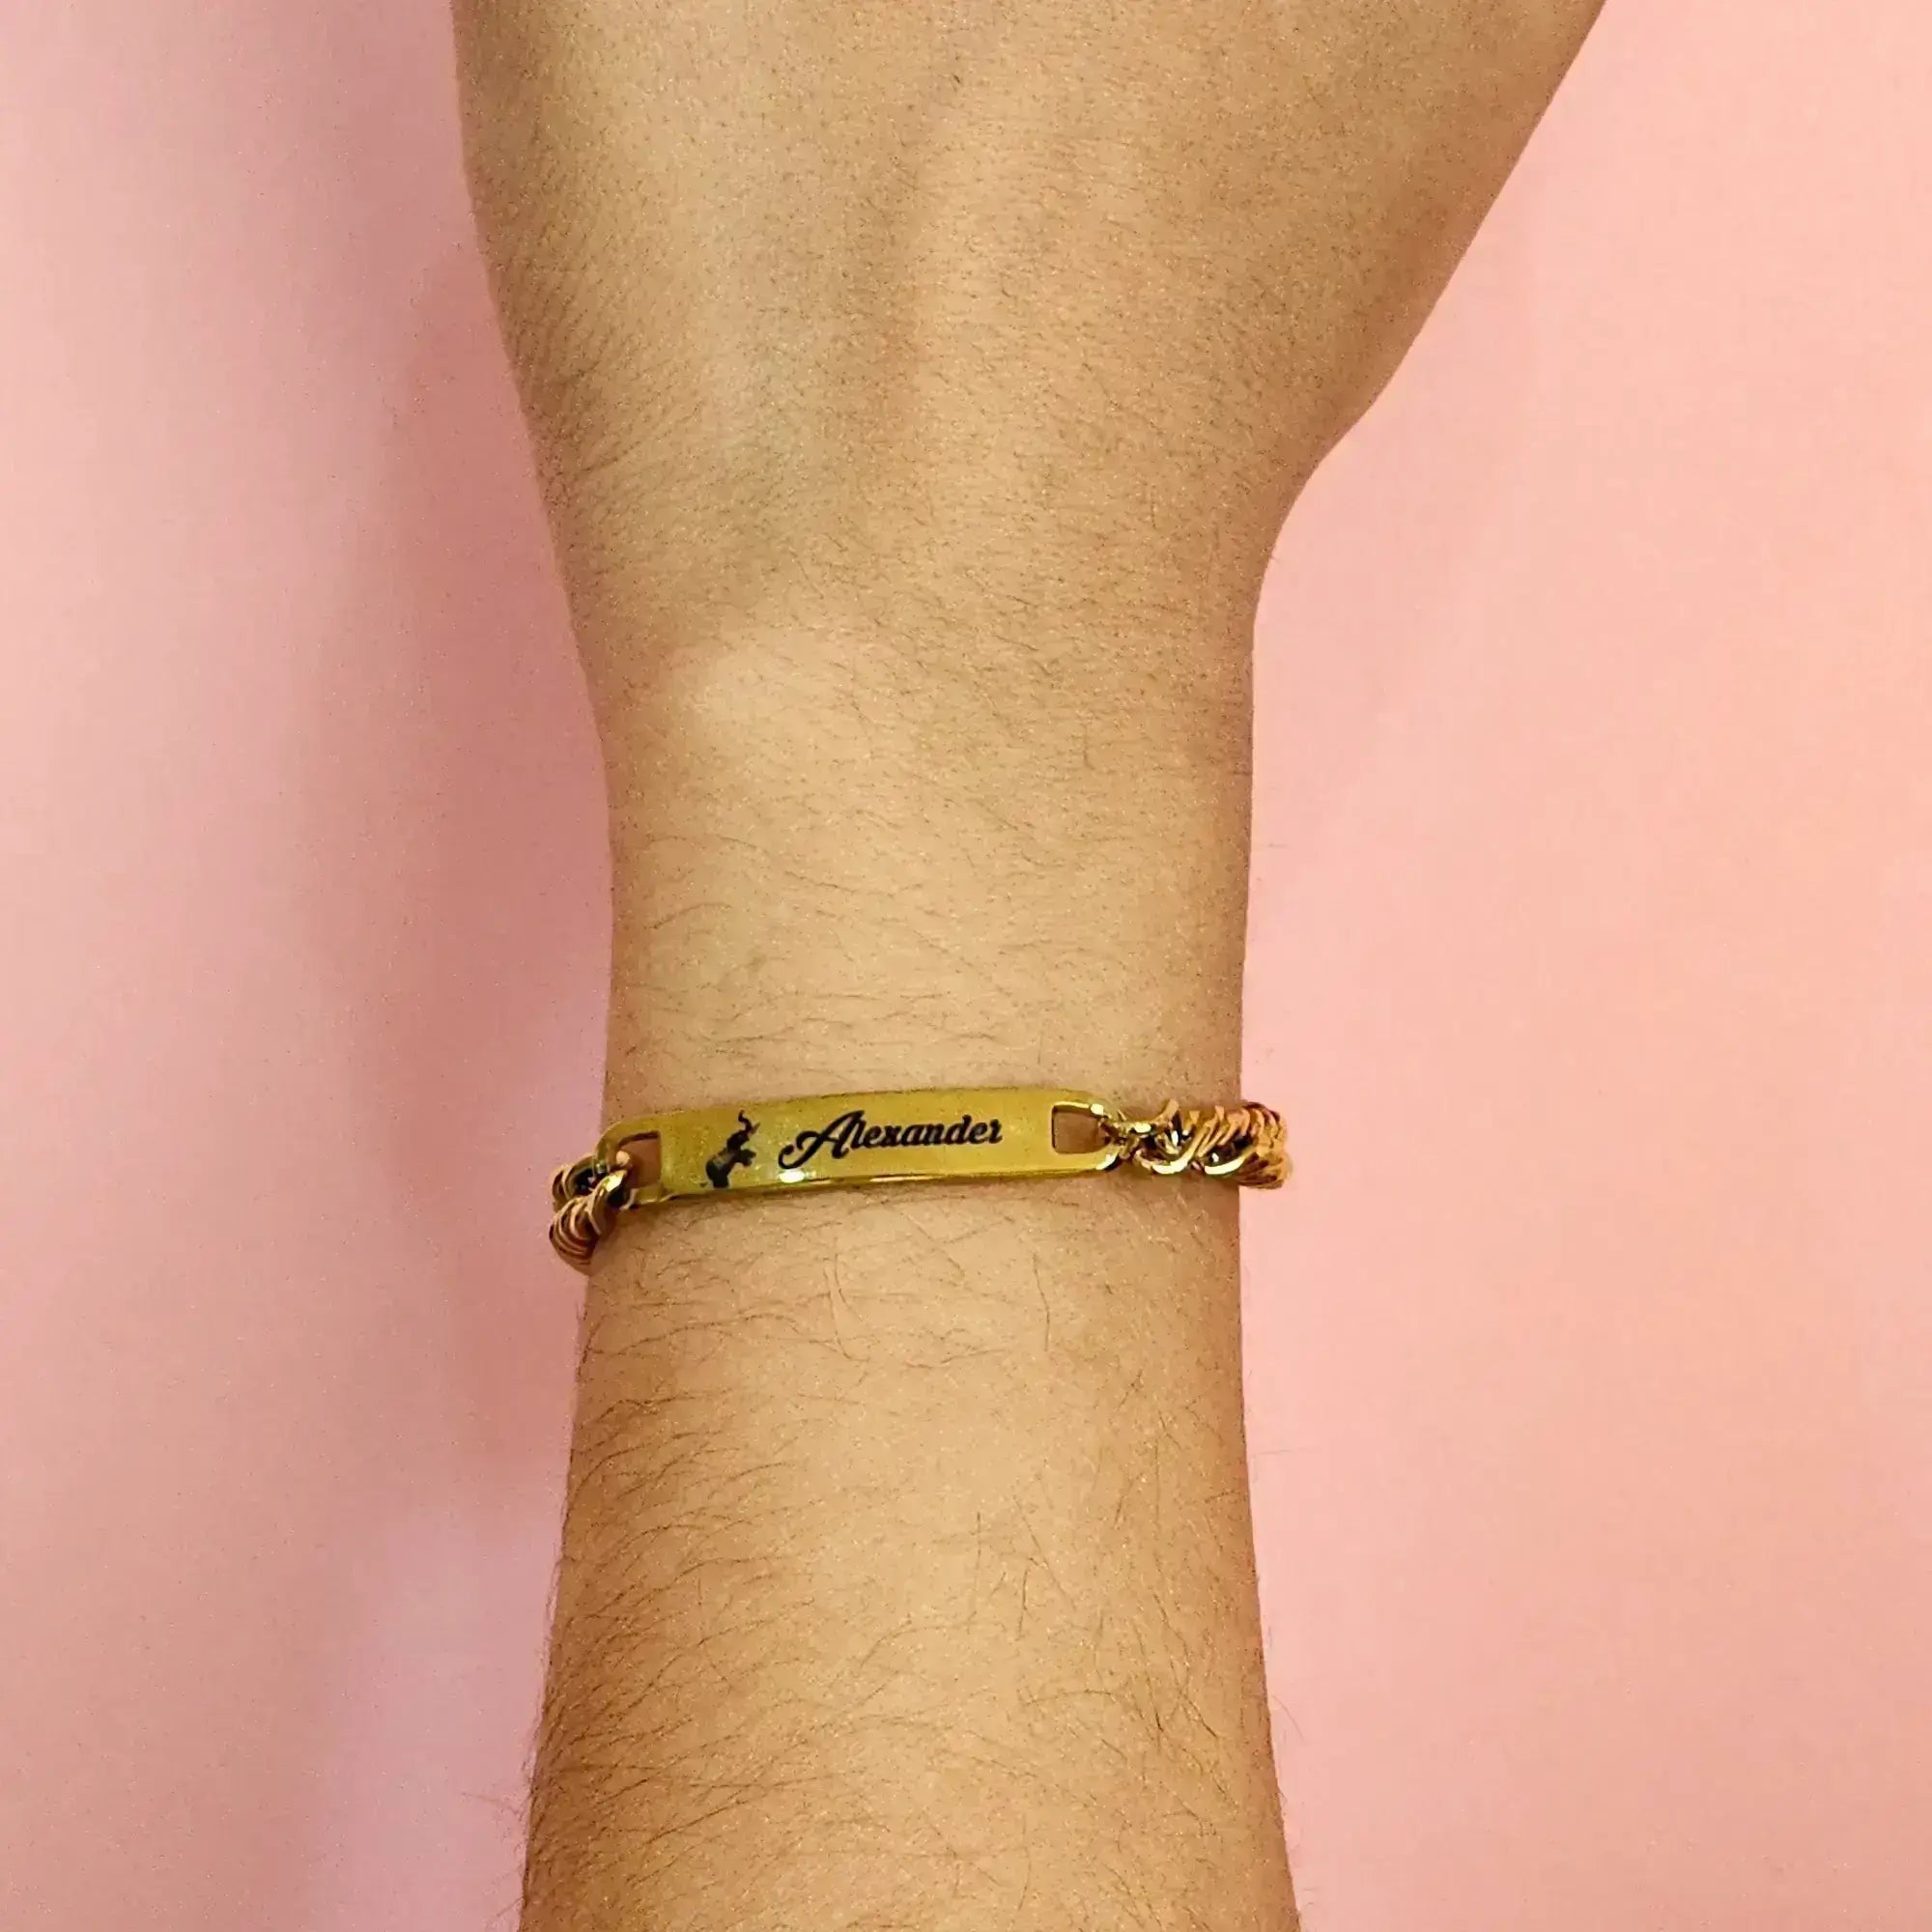 Dainty and minimalist bangle bracelet